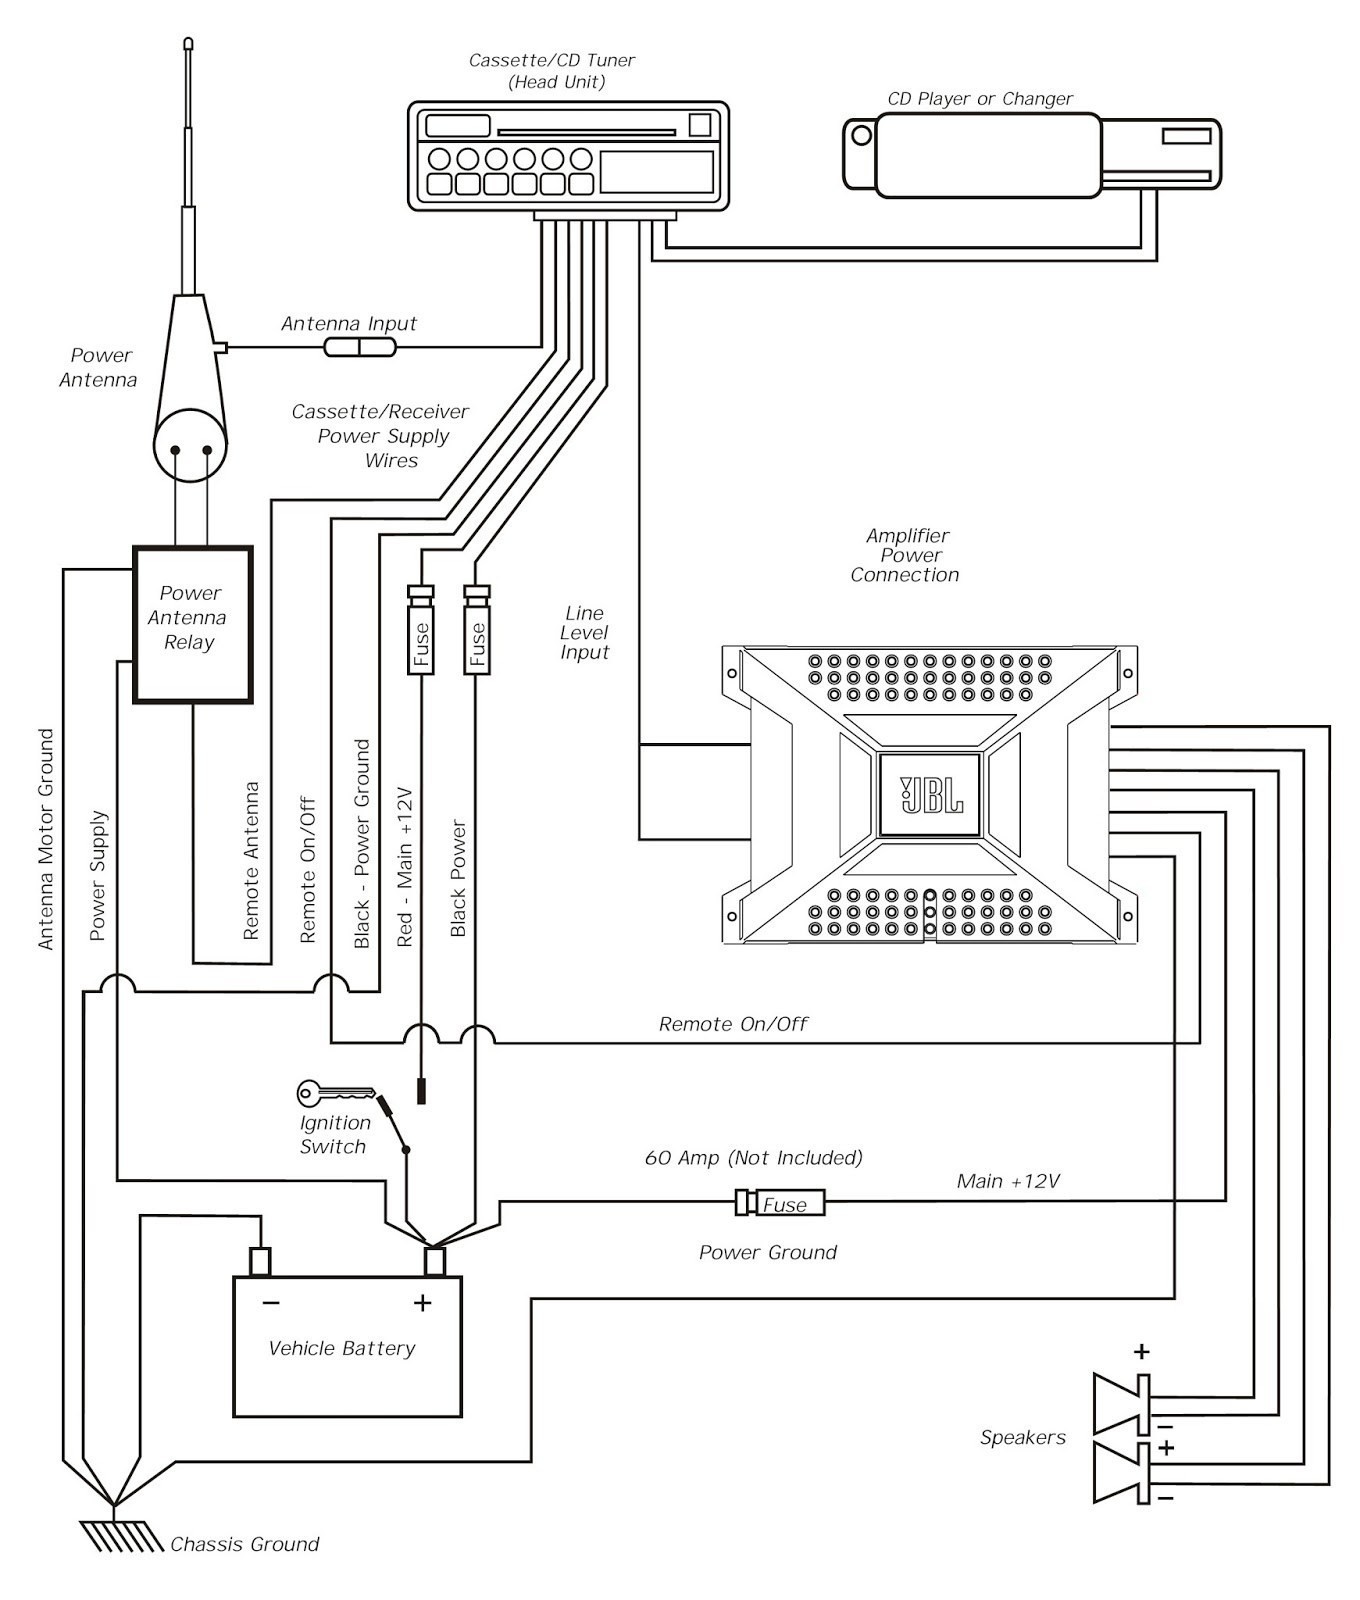 Superwinch 4200 Wiring Diagram Schematic Diagrams Massey Ferguson Solenoid Wiring Diagram Ktm Solenoid Wiring Diagram